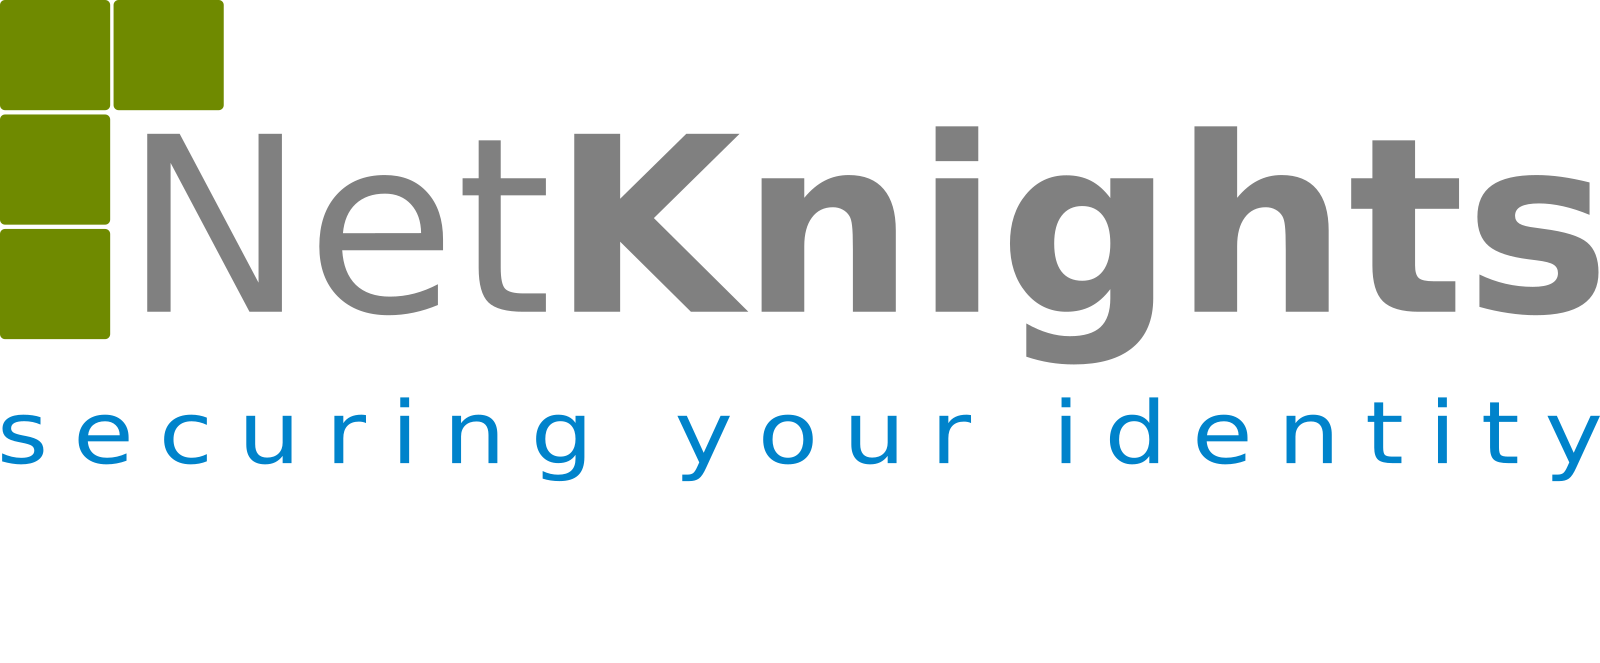 Logo der NetKnights GmbH